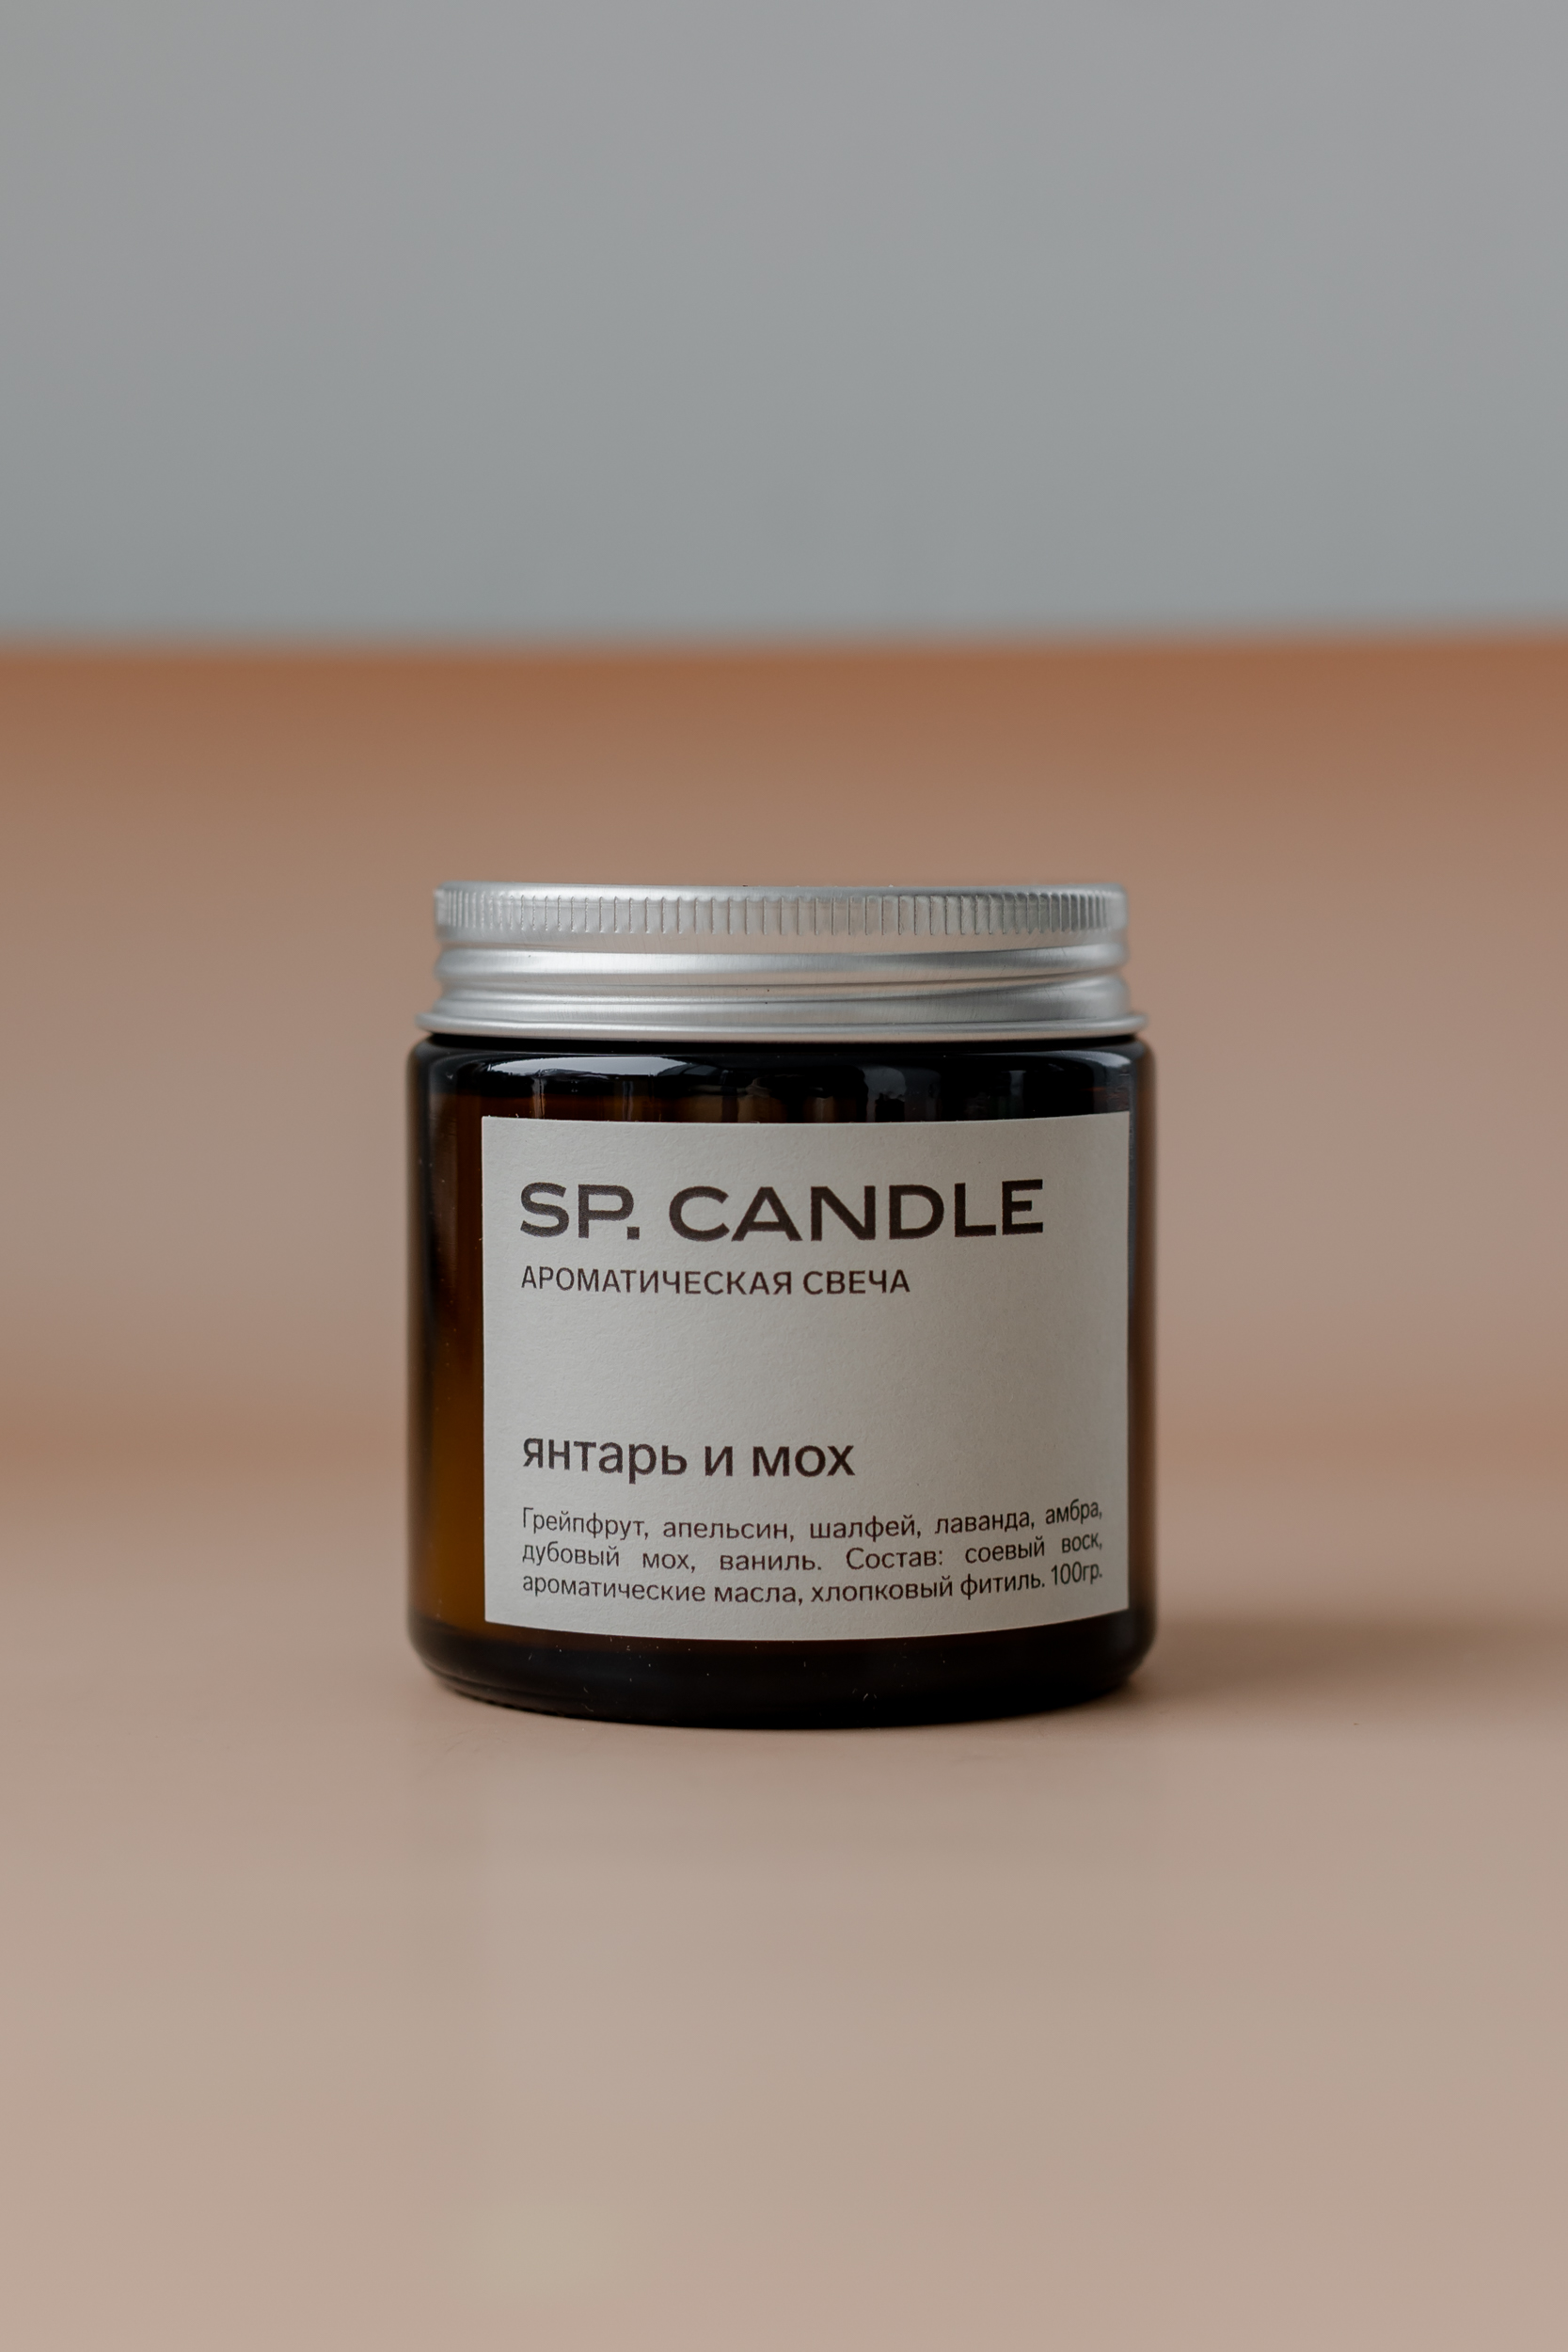 SP. CANDLE Ароматическая свеча Янтарь и мох, 100г - фото 1